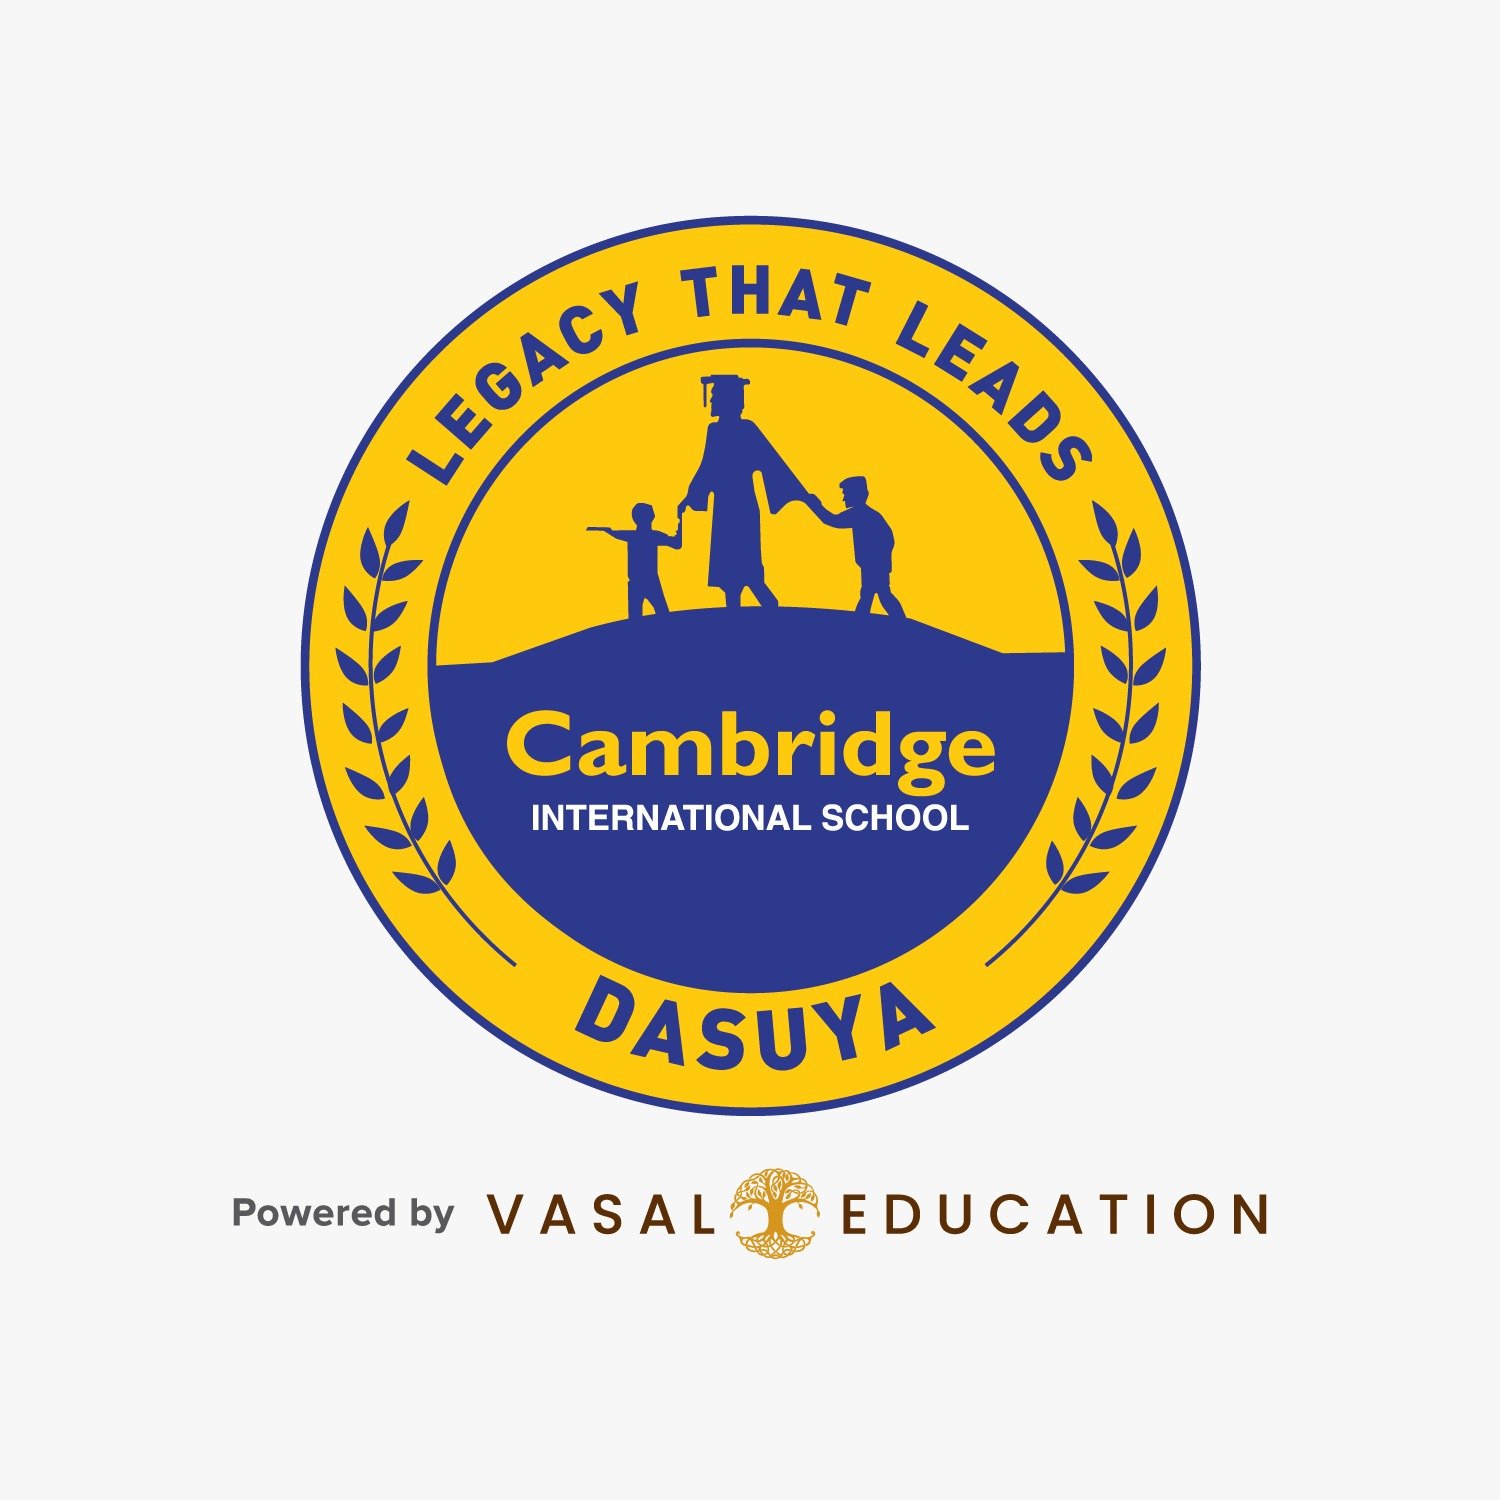 Cambridge International School, Dasuya